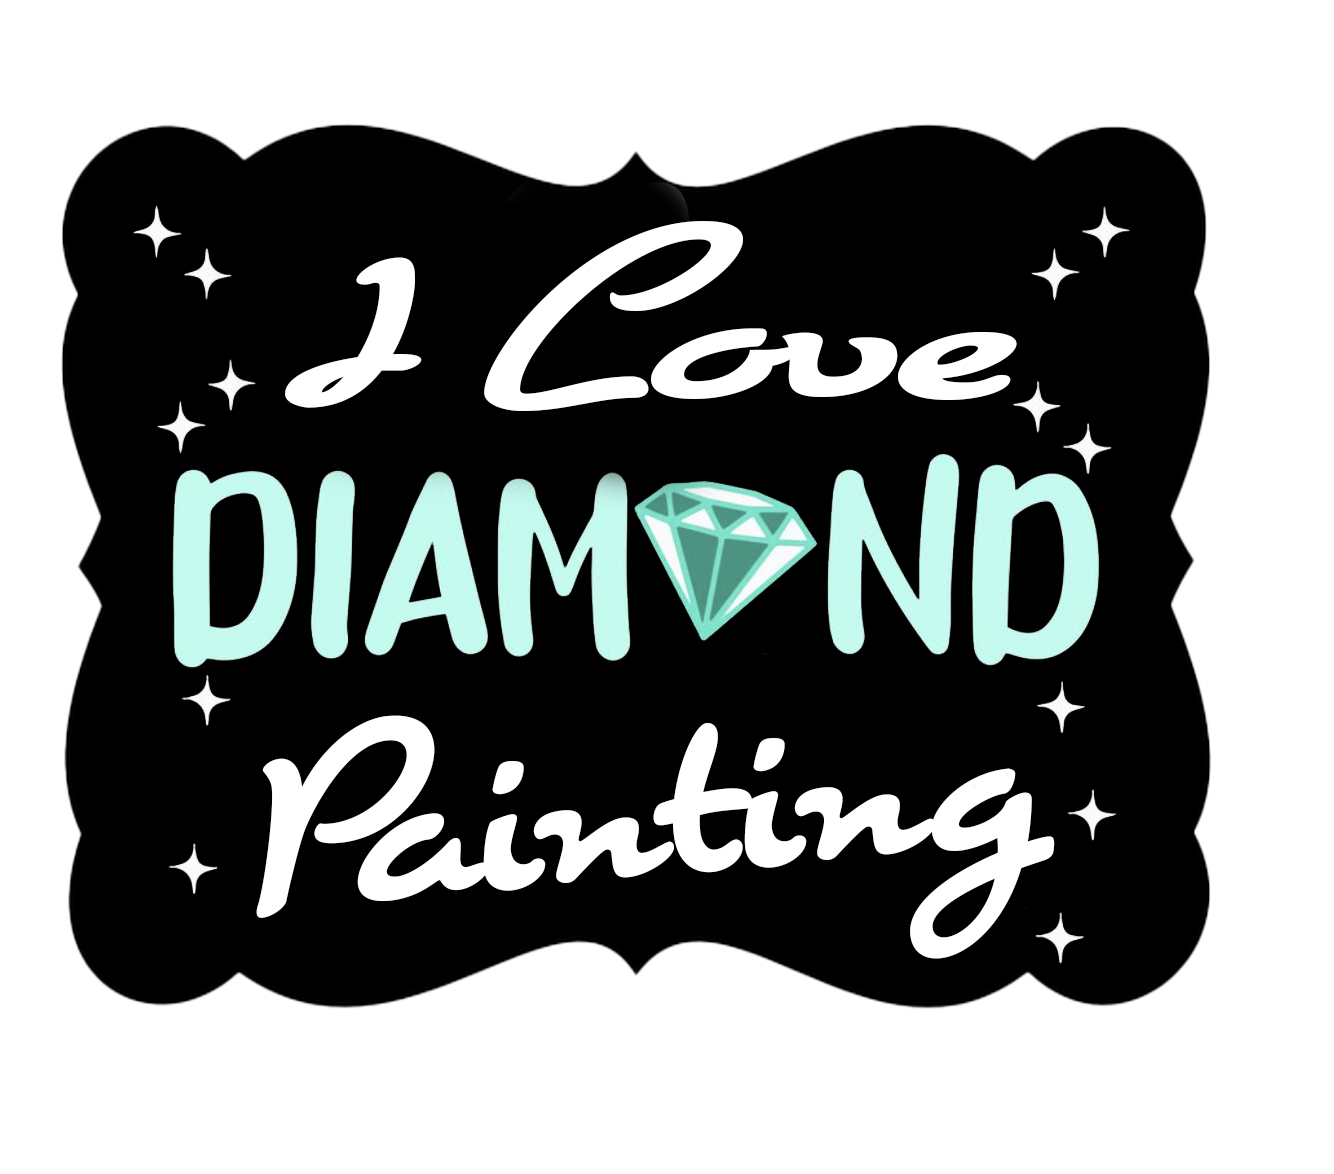 "I Love Diamond Pianting" merchandise Diamond Painting Planet